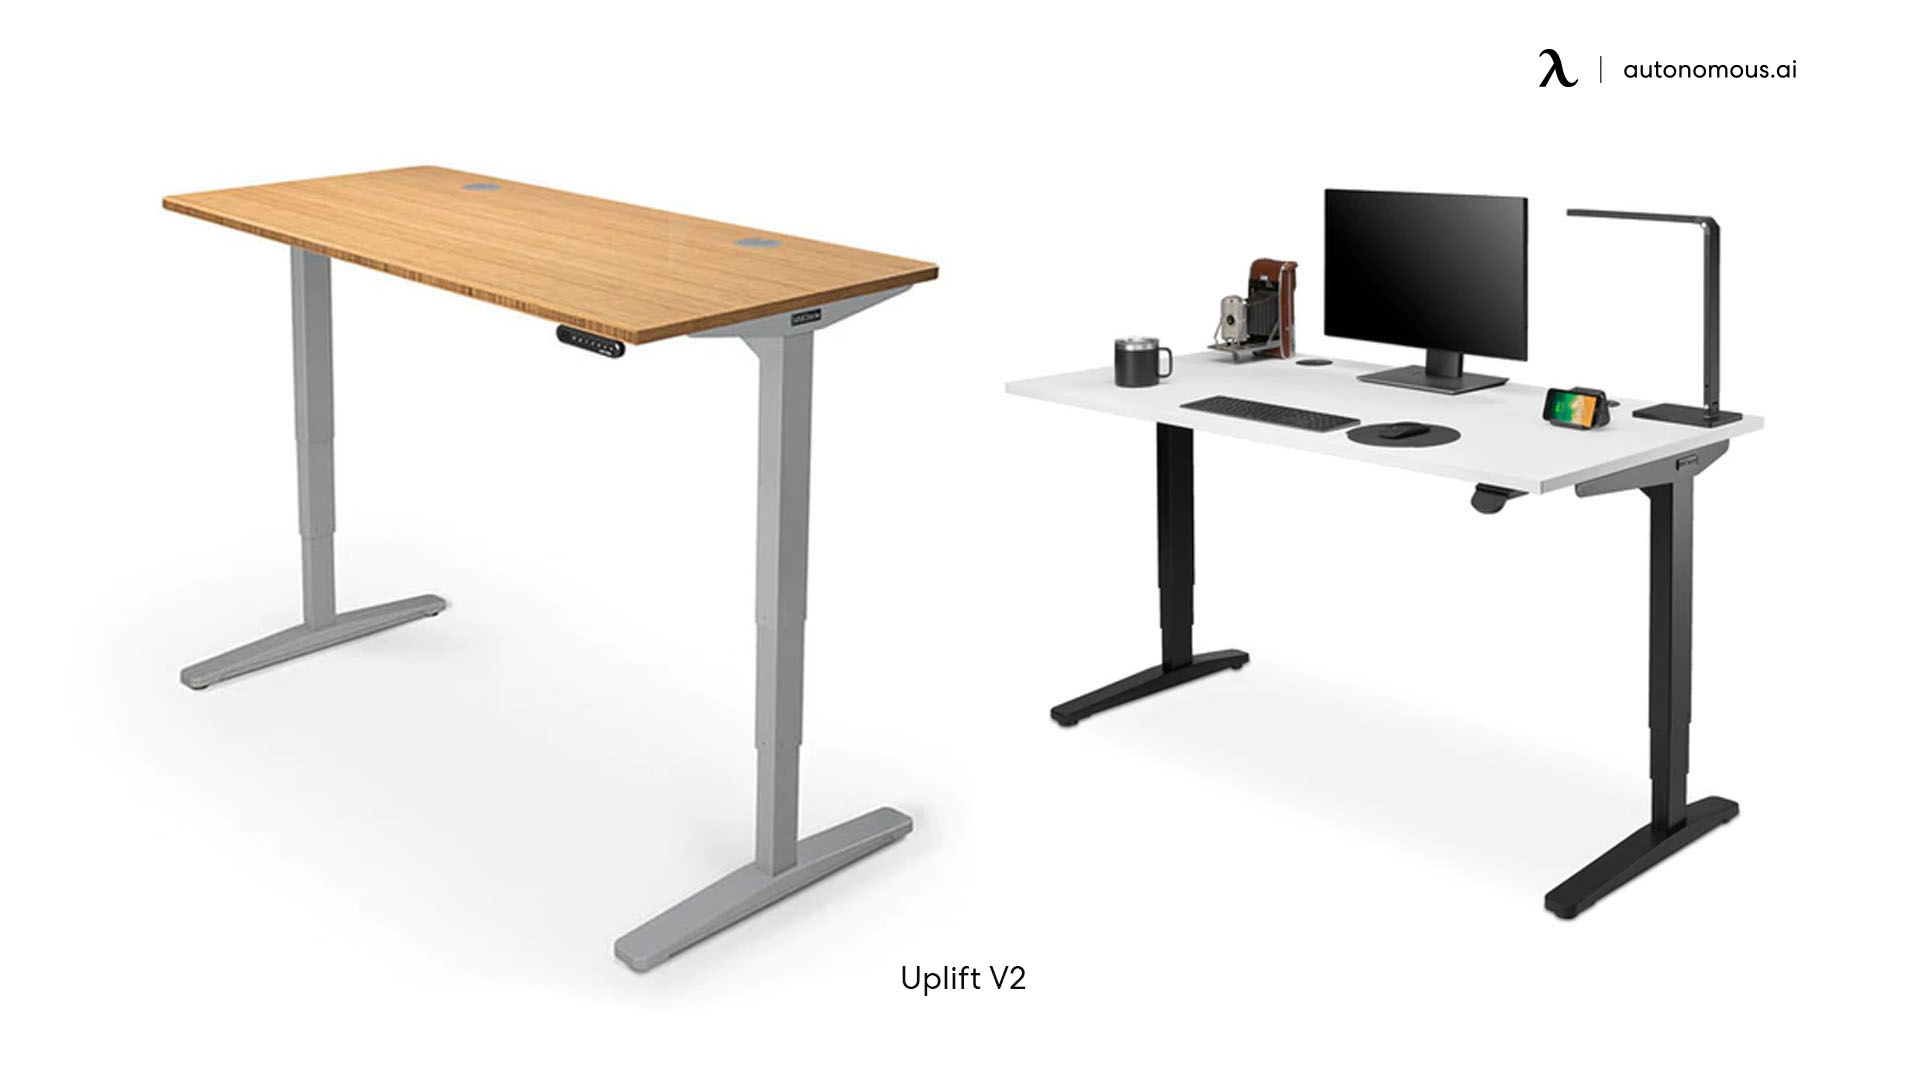 Uplift V2 modern wood desk